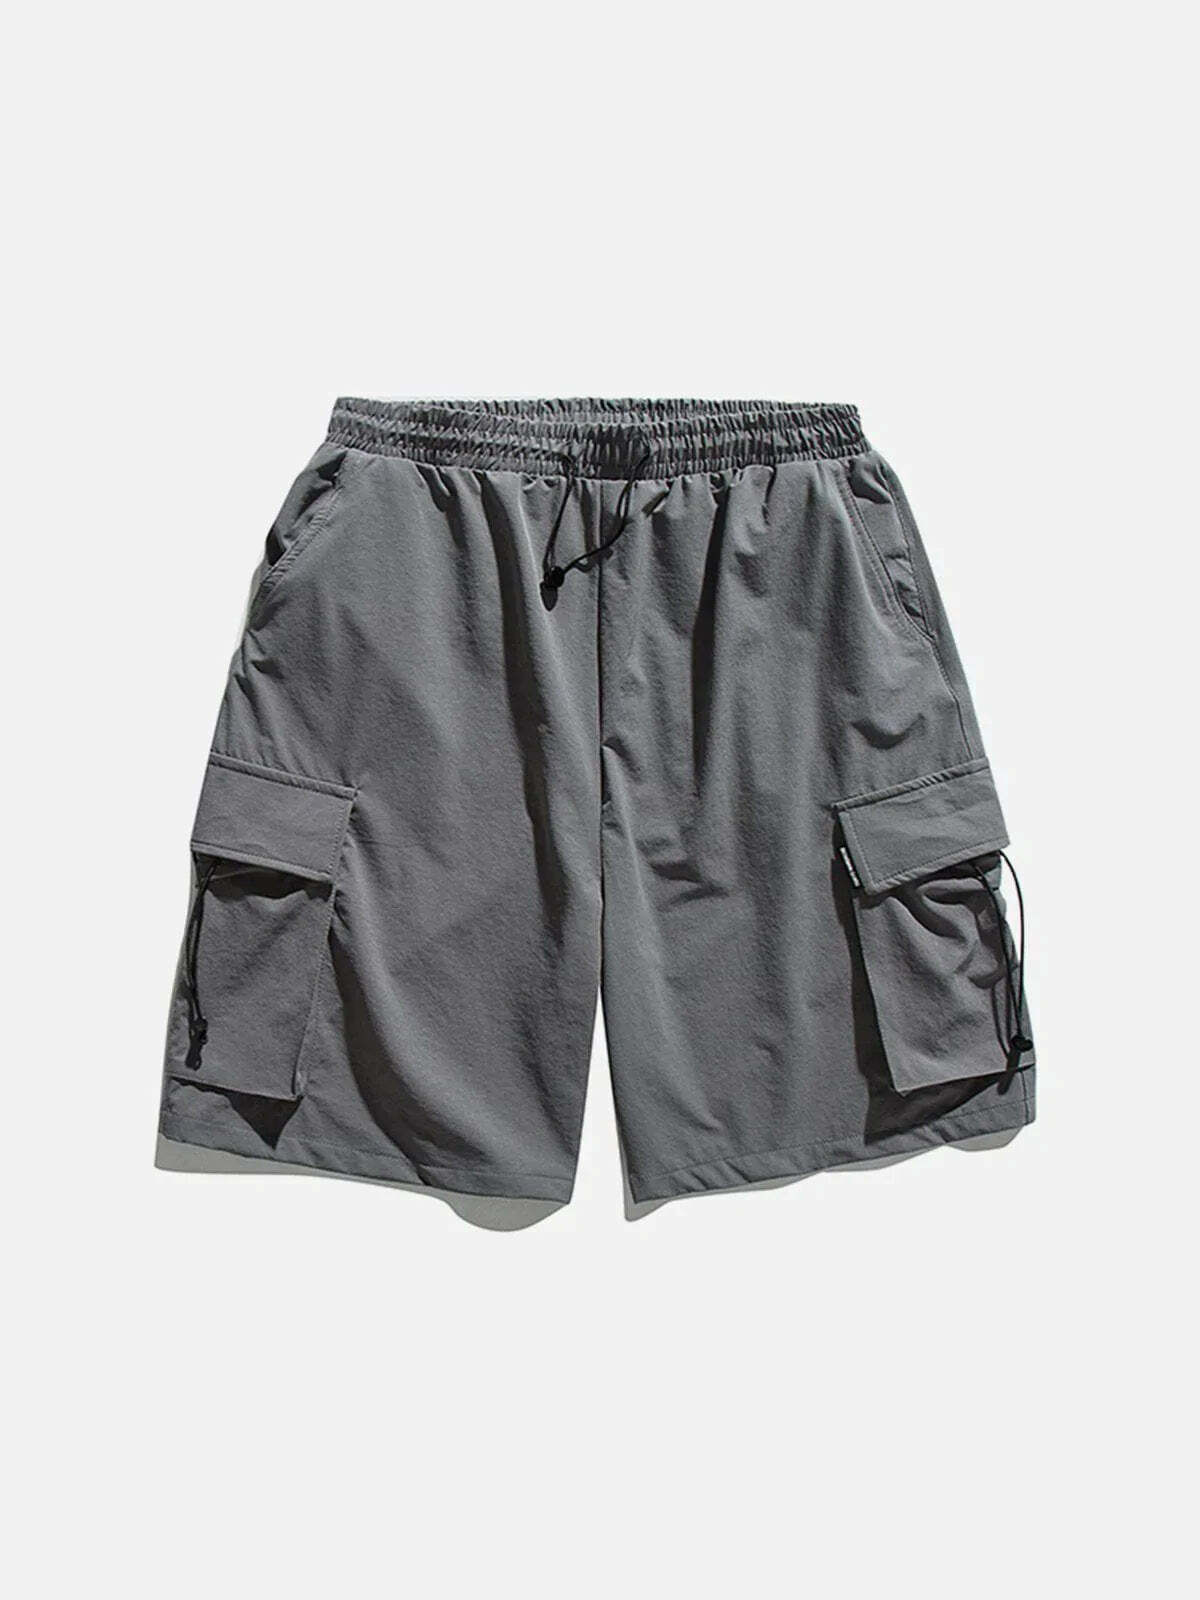 sleek loose fit pocket shorts urban streetwear essential 6187